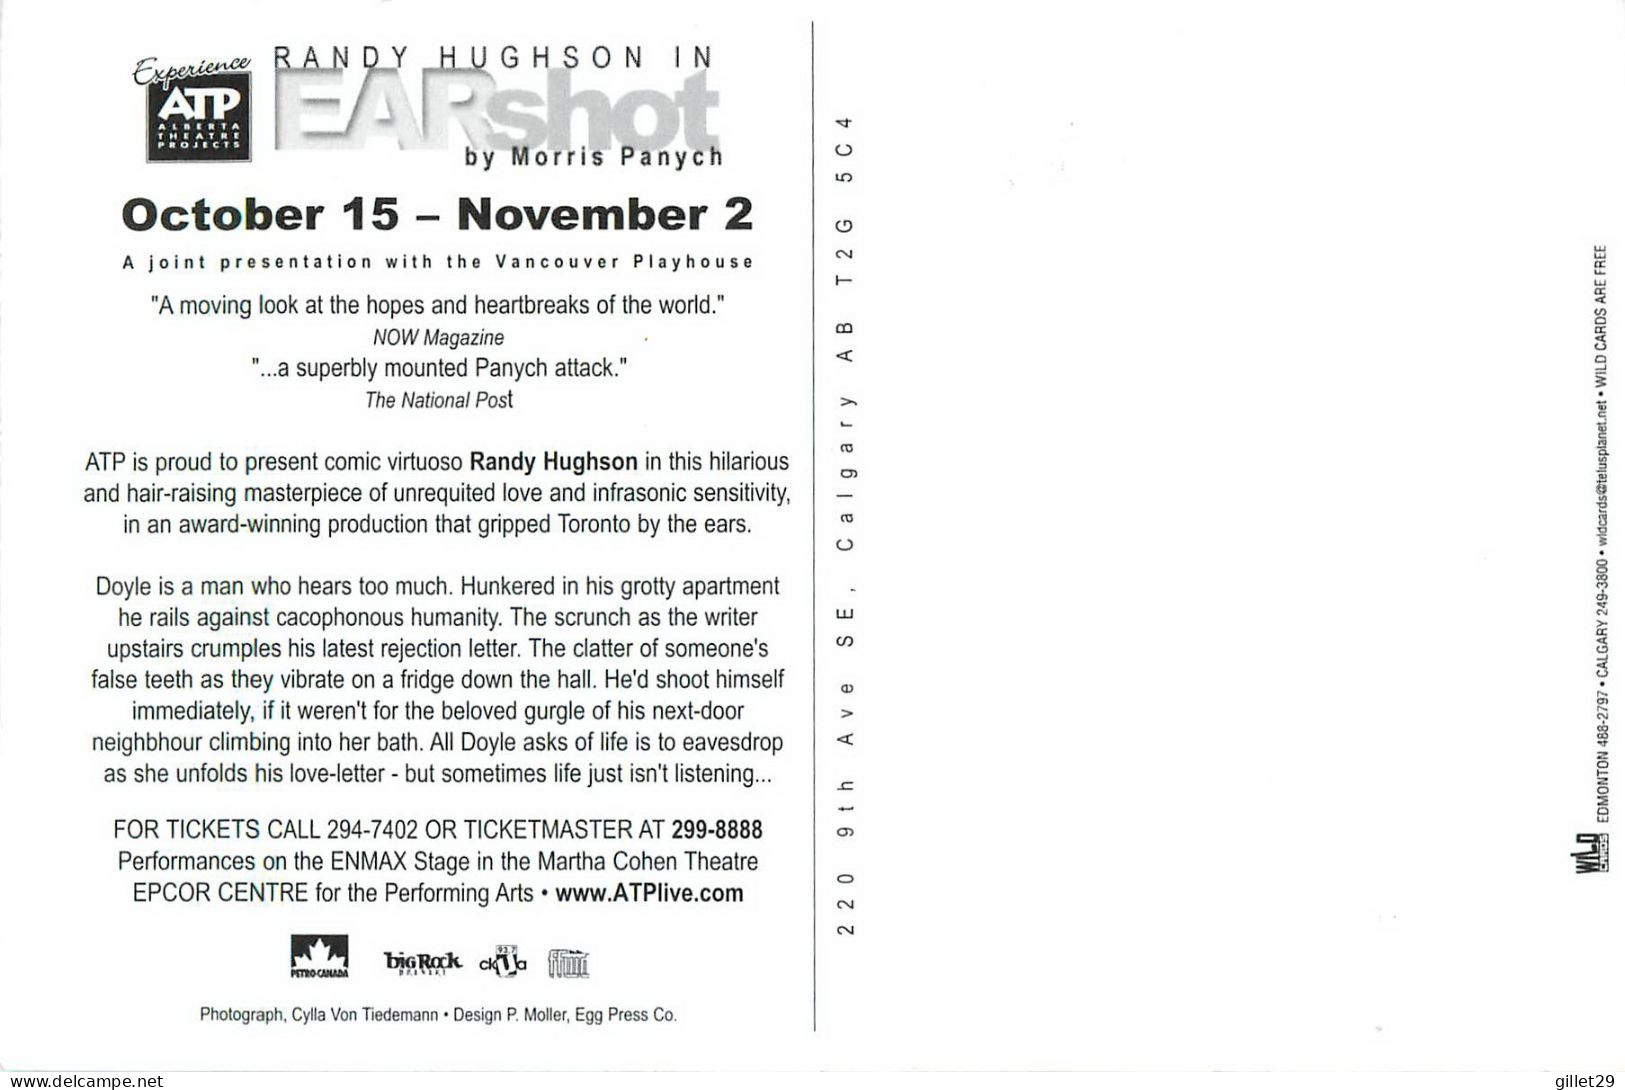 PUBLICITÉ - ADVERTISING - RANDY HIGHSON IN EAR SHOT BY MORRIS PANYCH - CALGARY ALBERTA - - Publicité